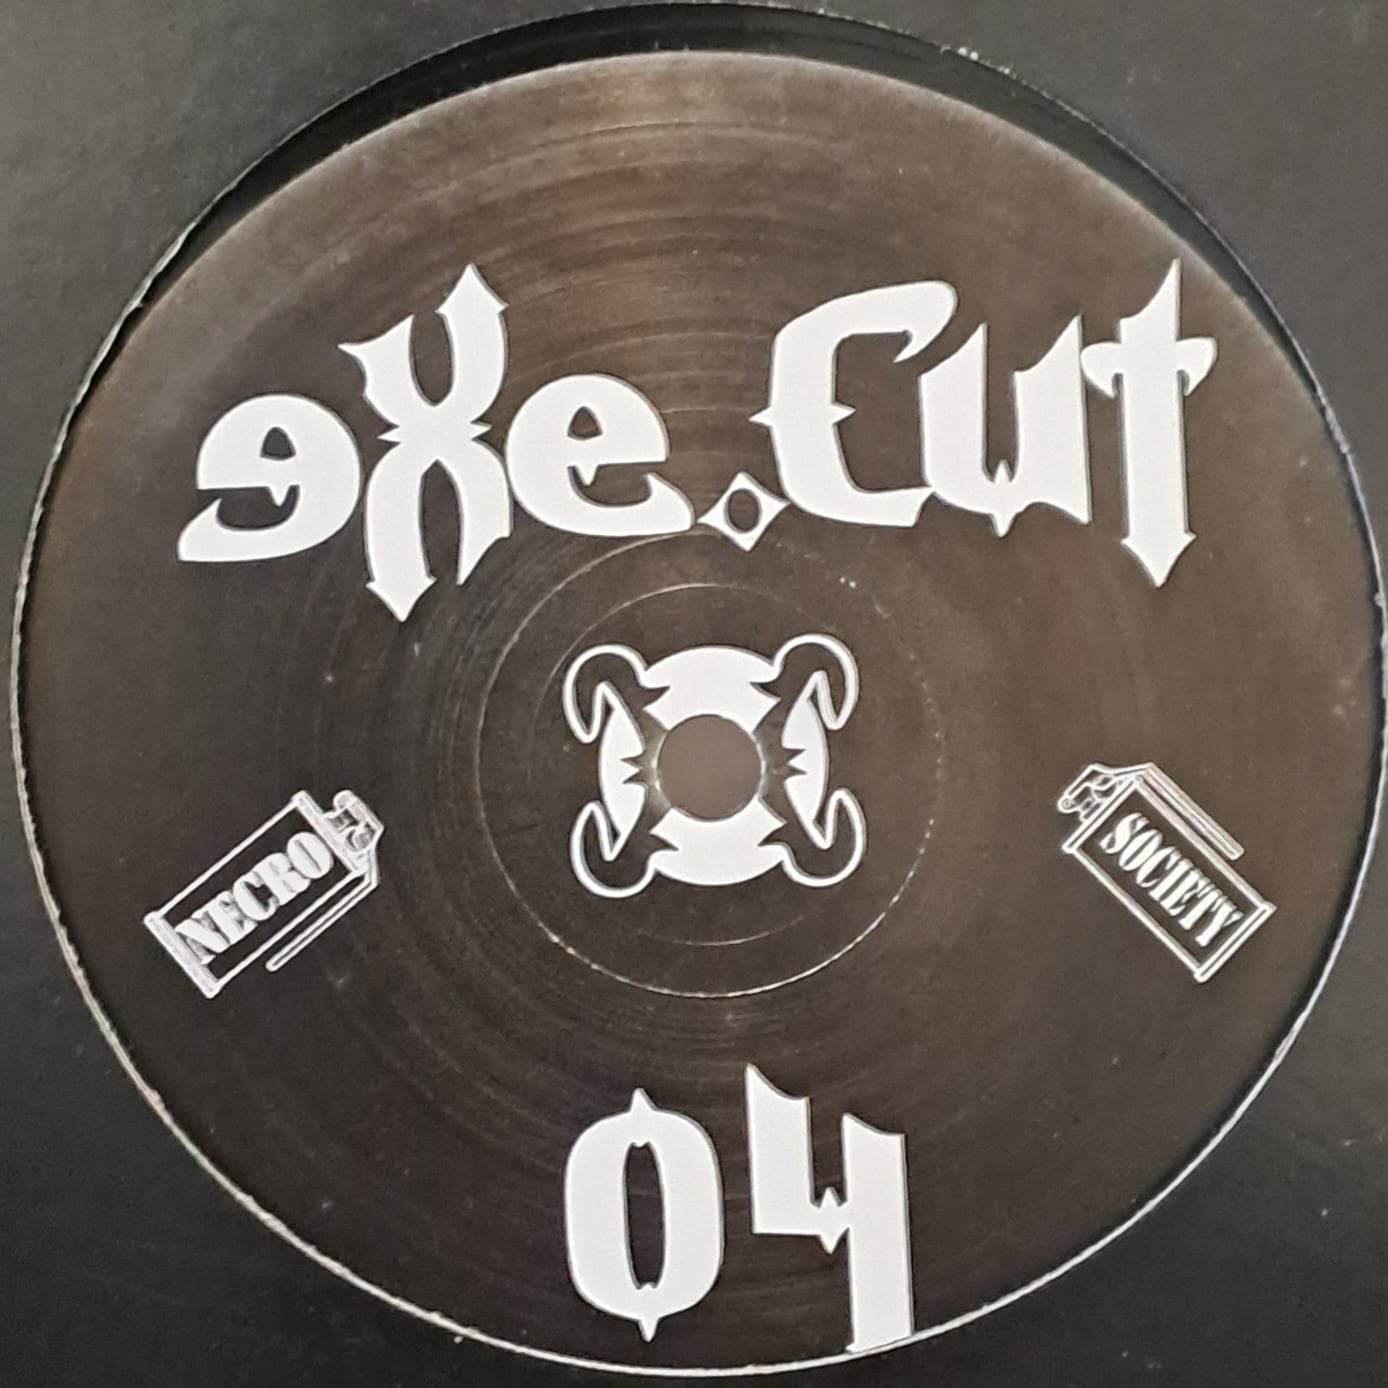 Exe Cut 004 - vinyle hardcore